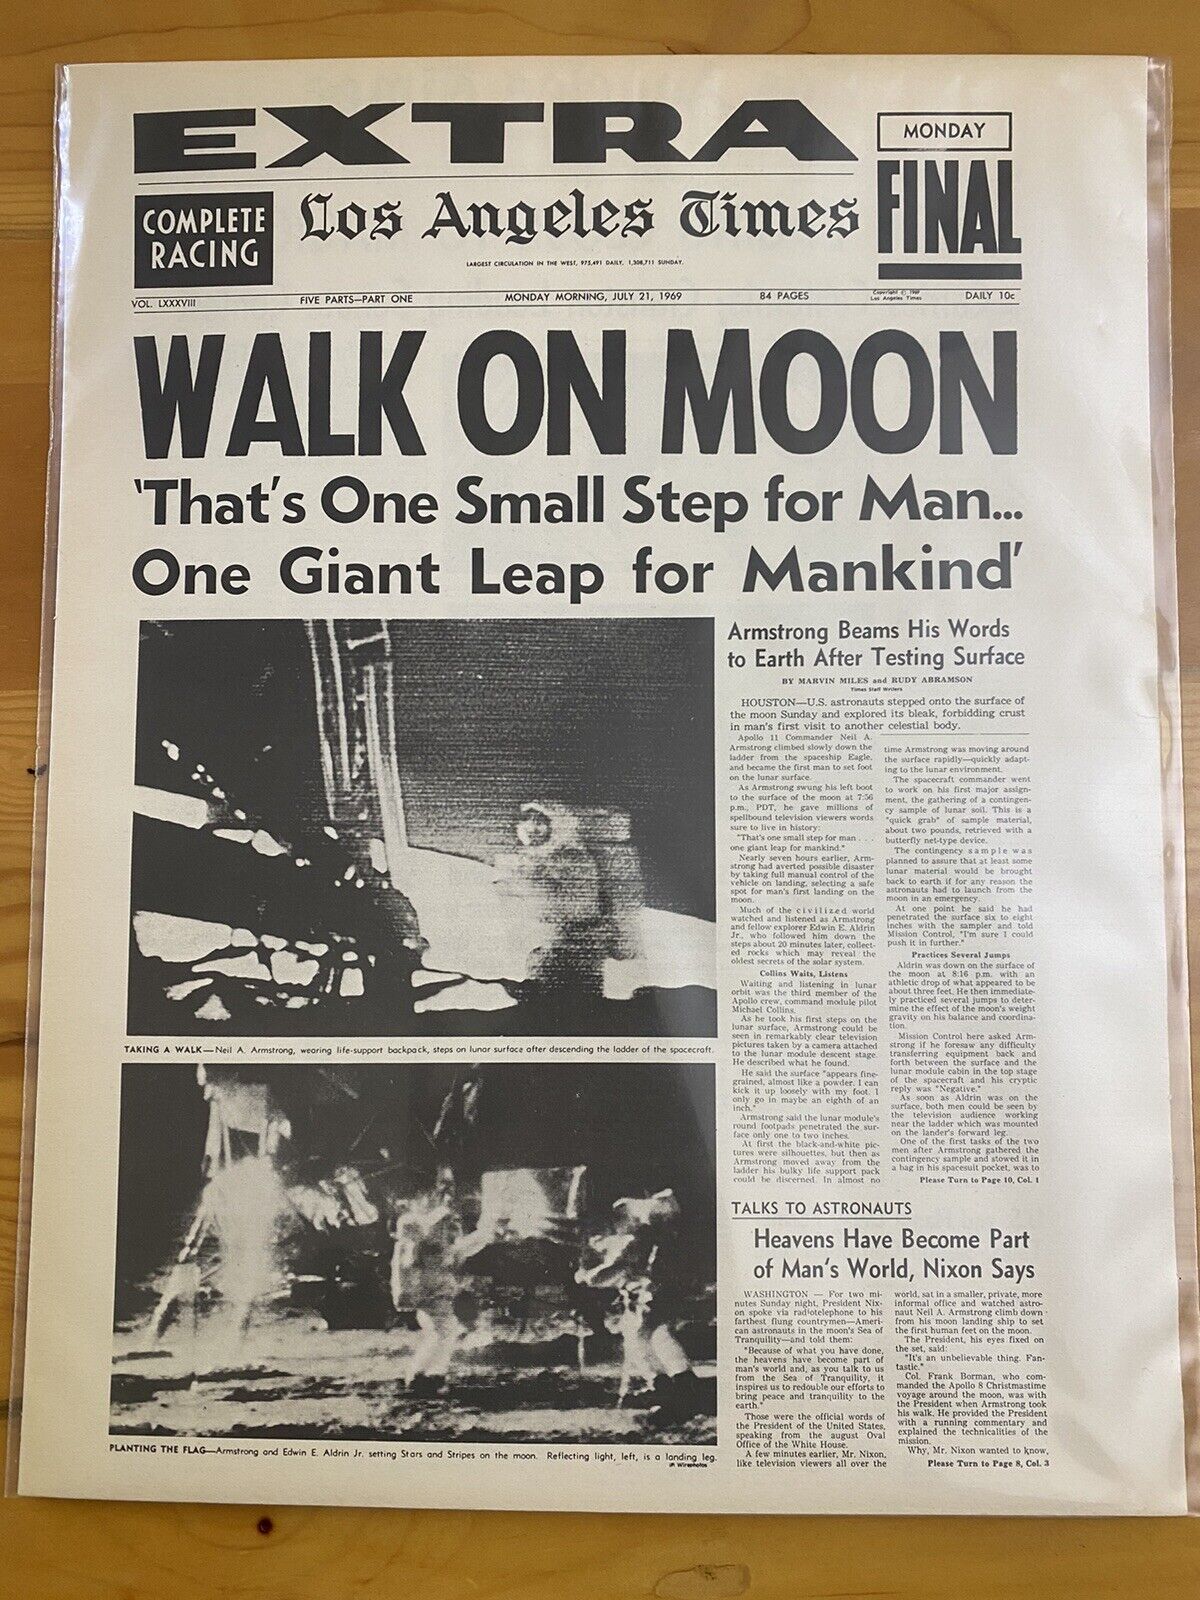 VINTAGE NEWSPAPER HEADLINE ~NASA SPACESHIP ARMSTRONG MEN LAND MOON LANDING 1969